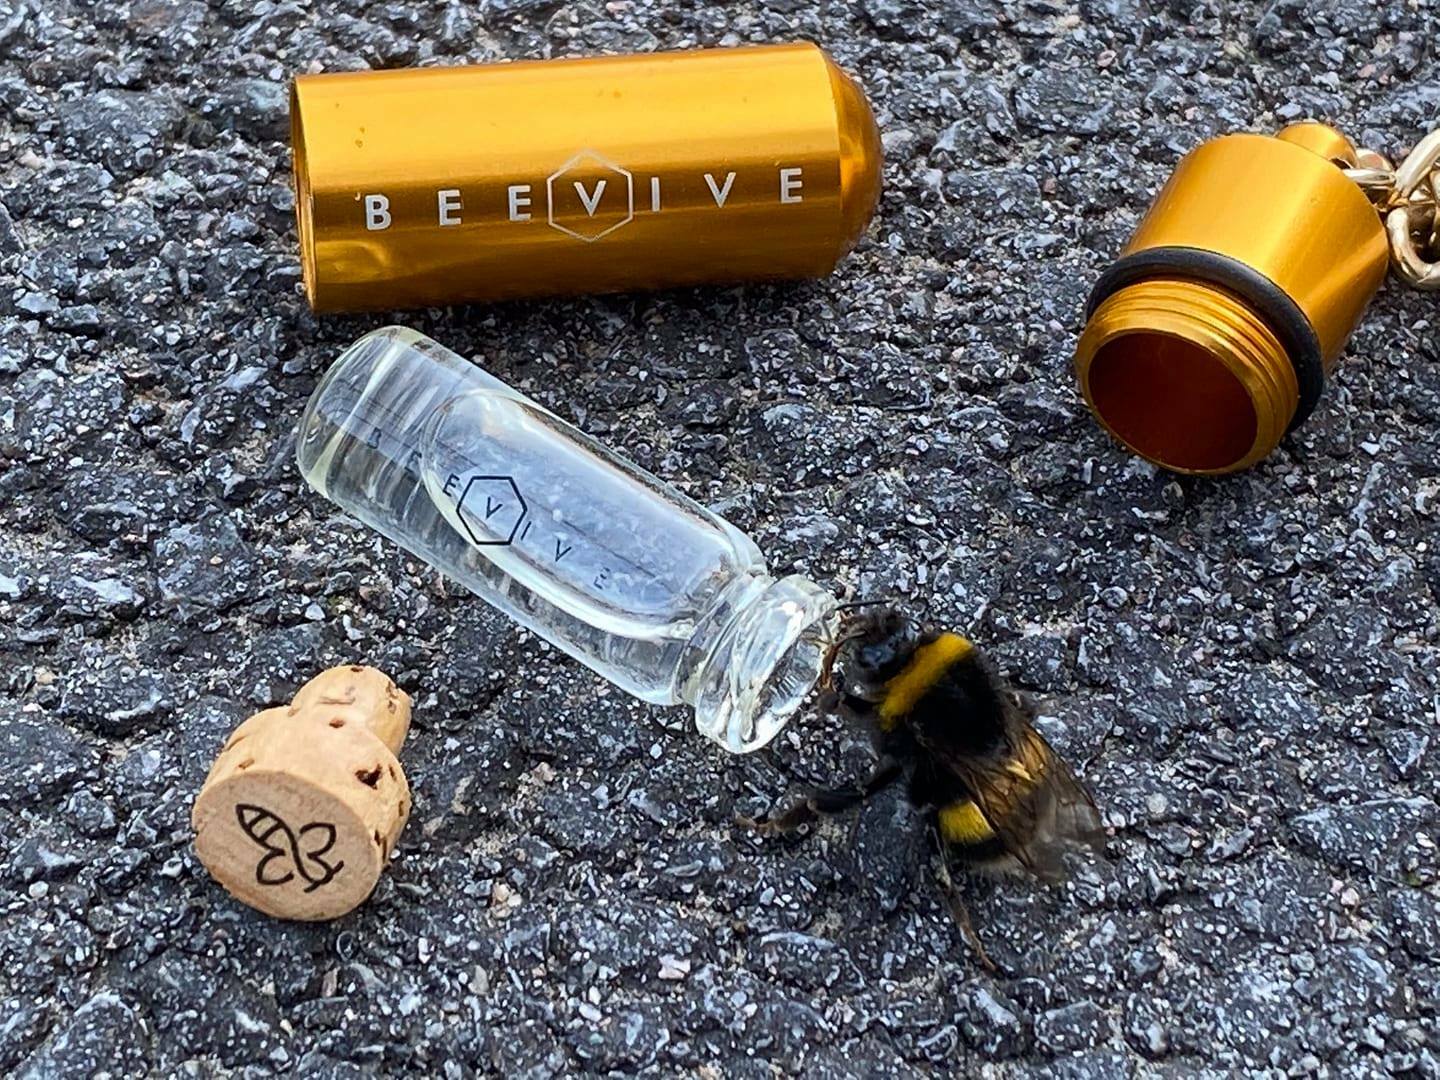 Bee Revival Keyring & Seed Kit